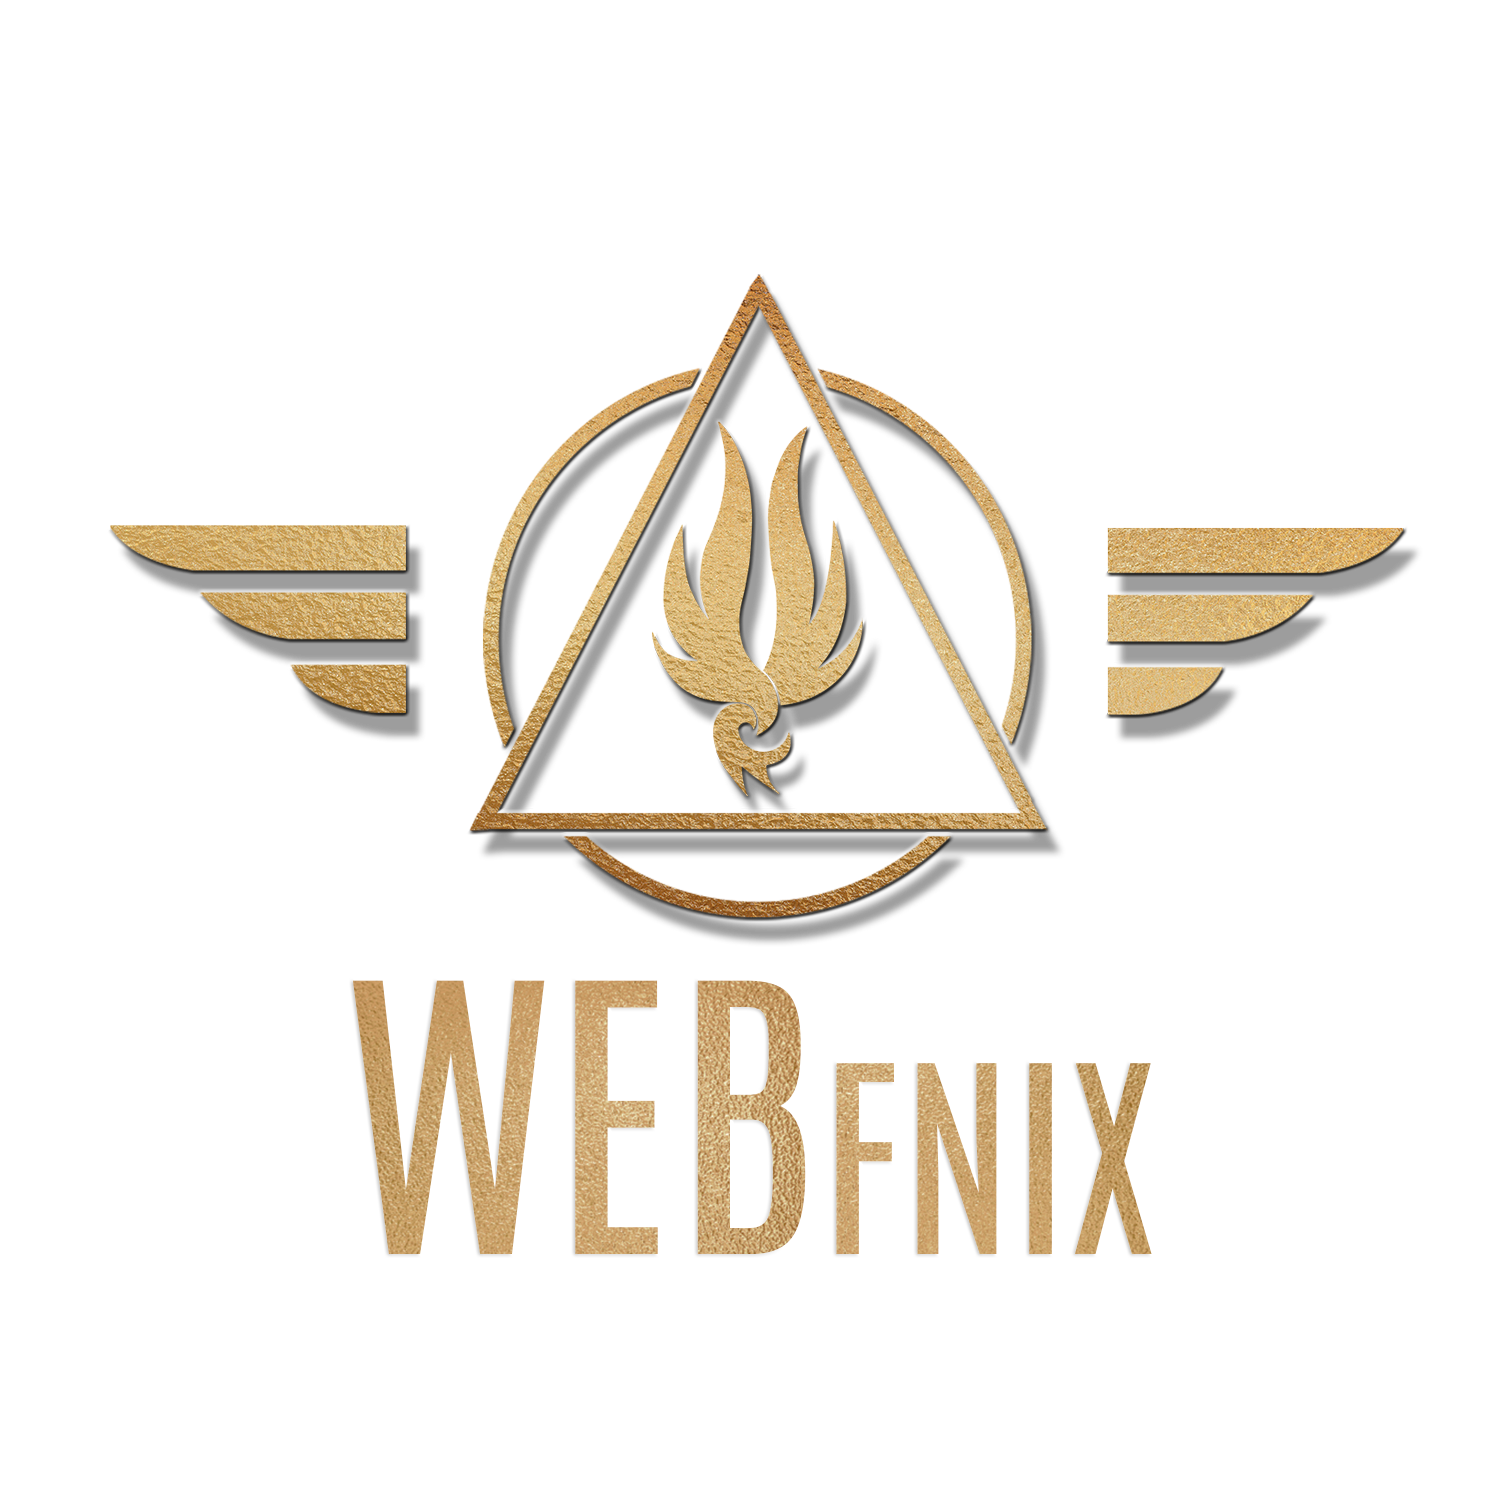 Webfnix